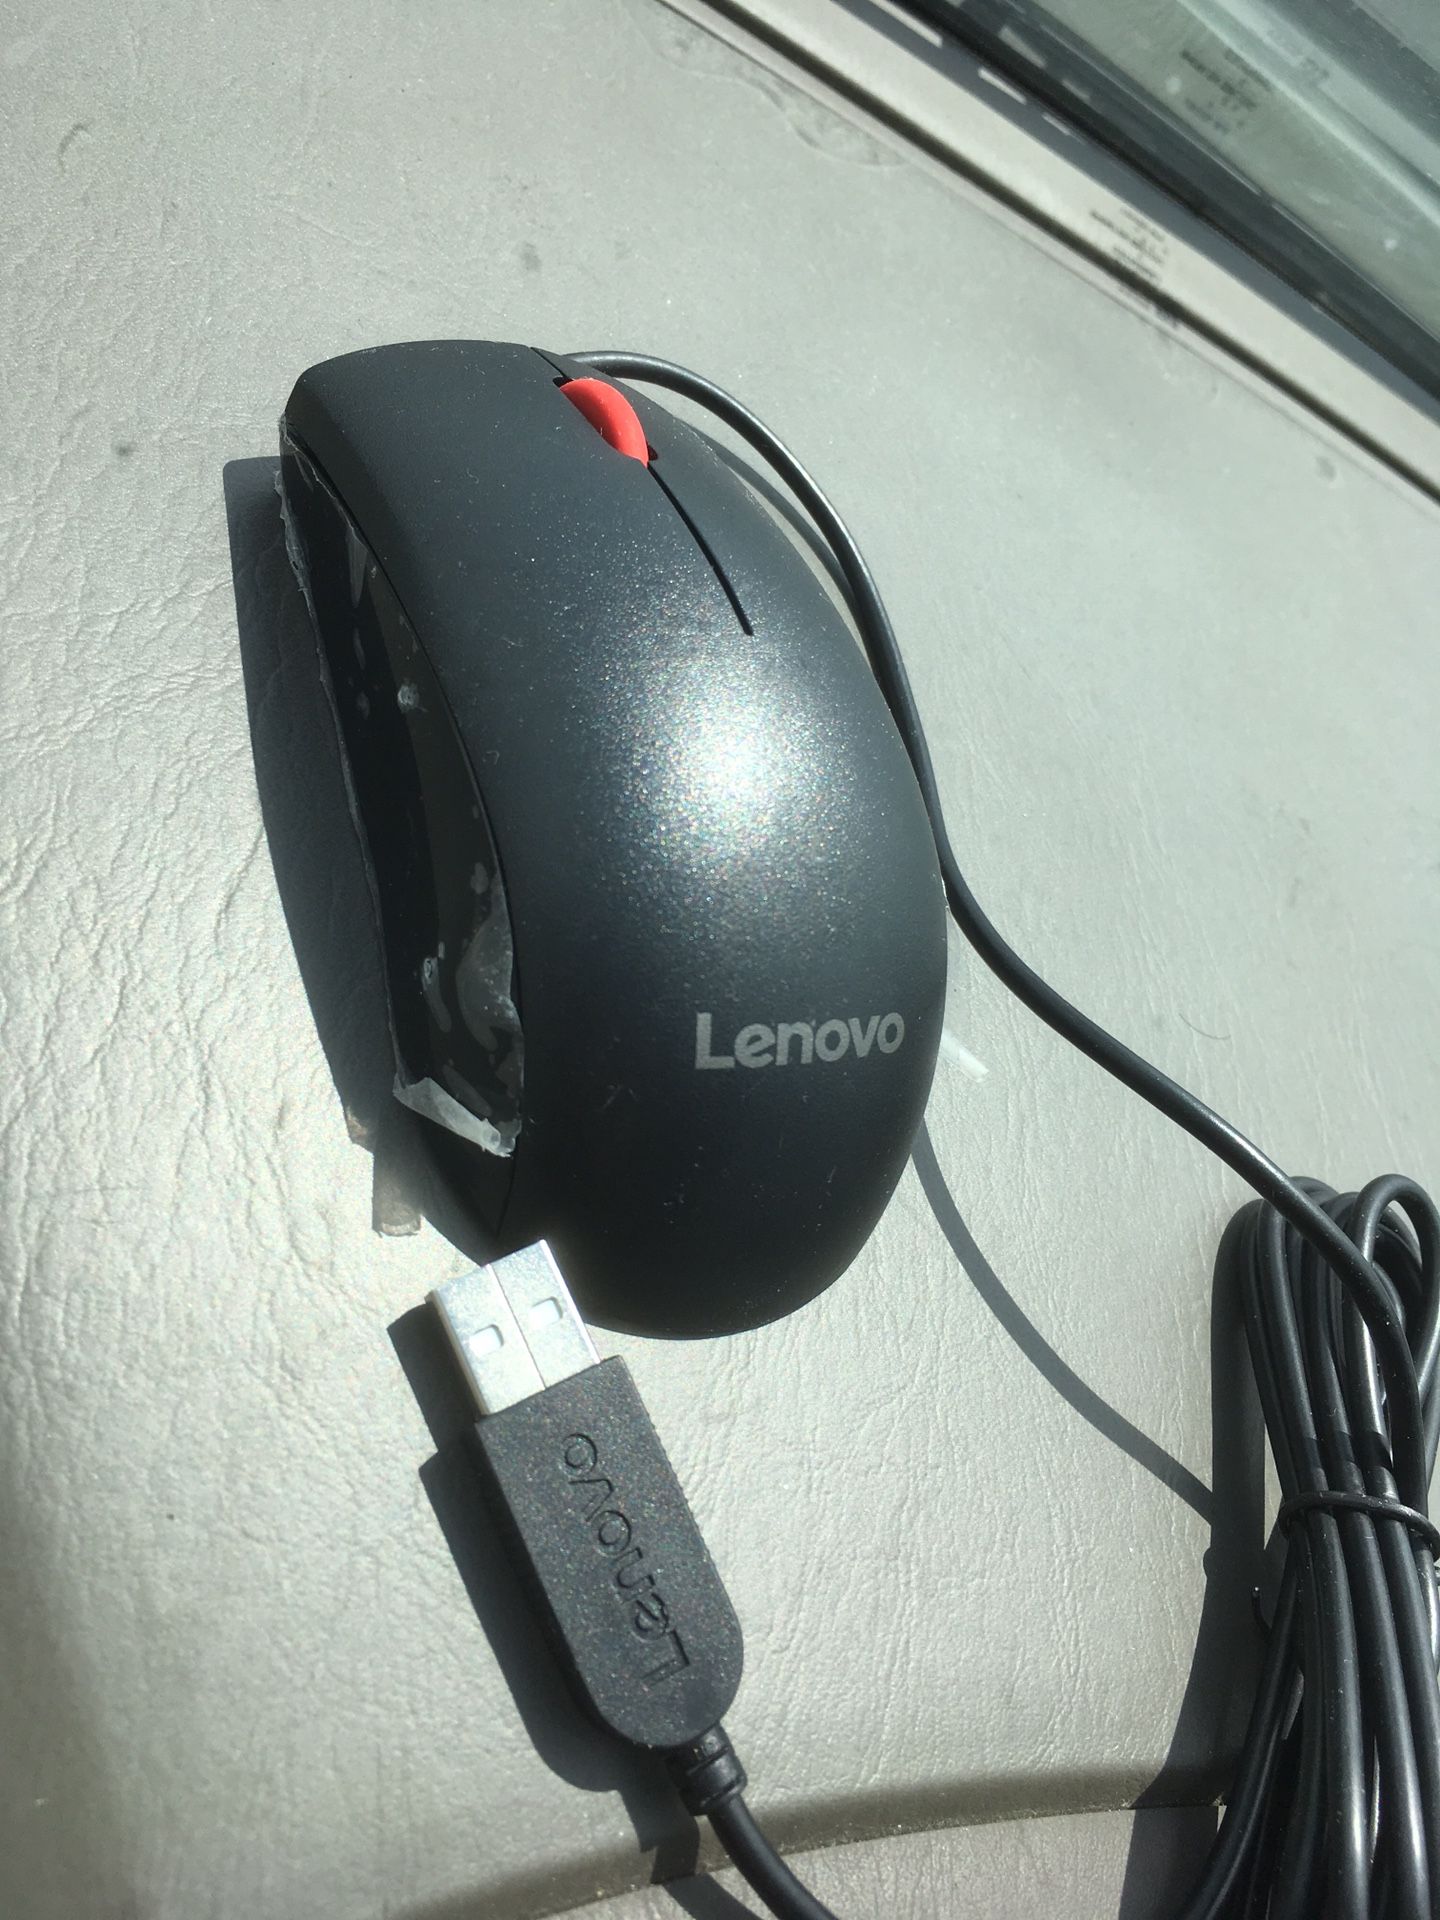 new lenovo mouse